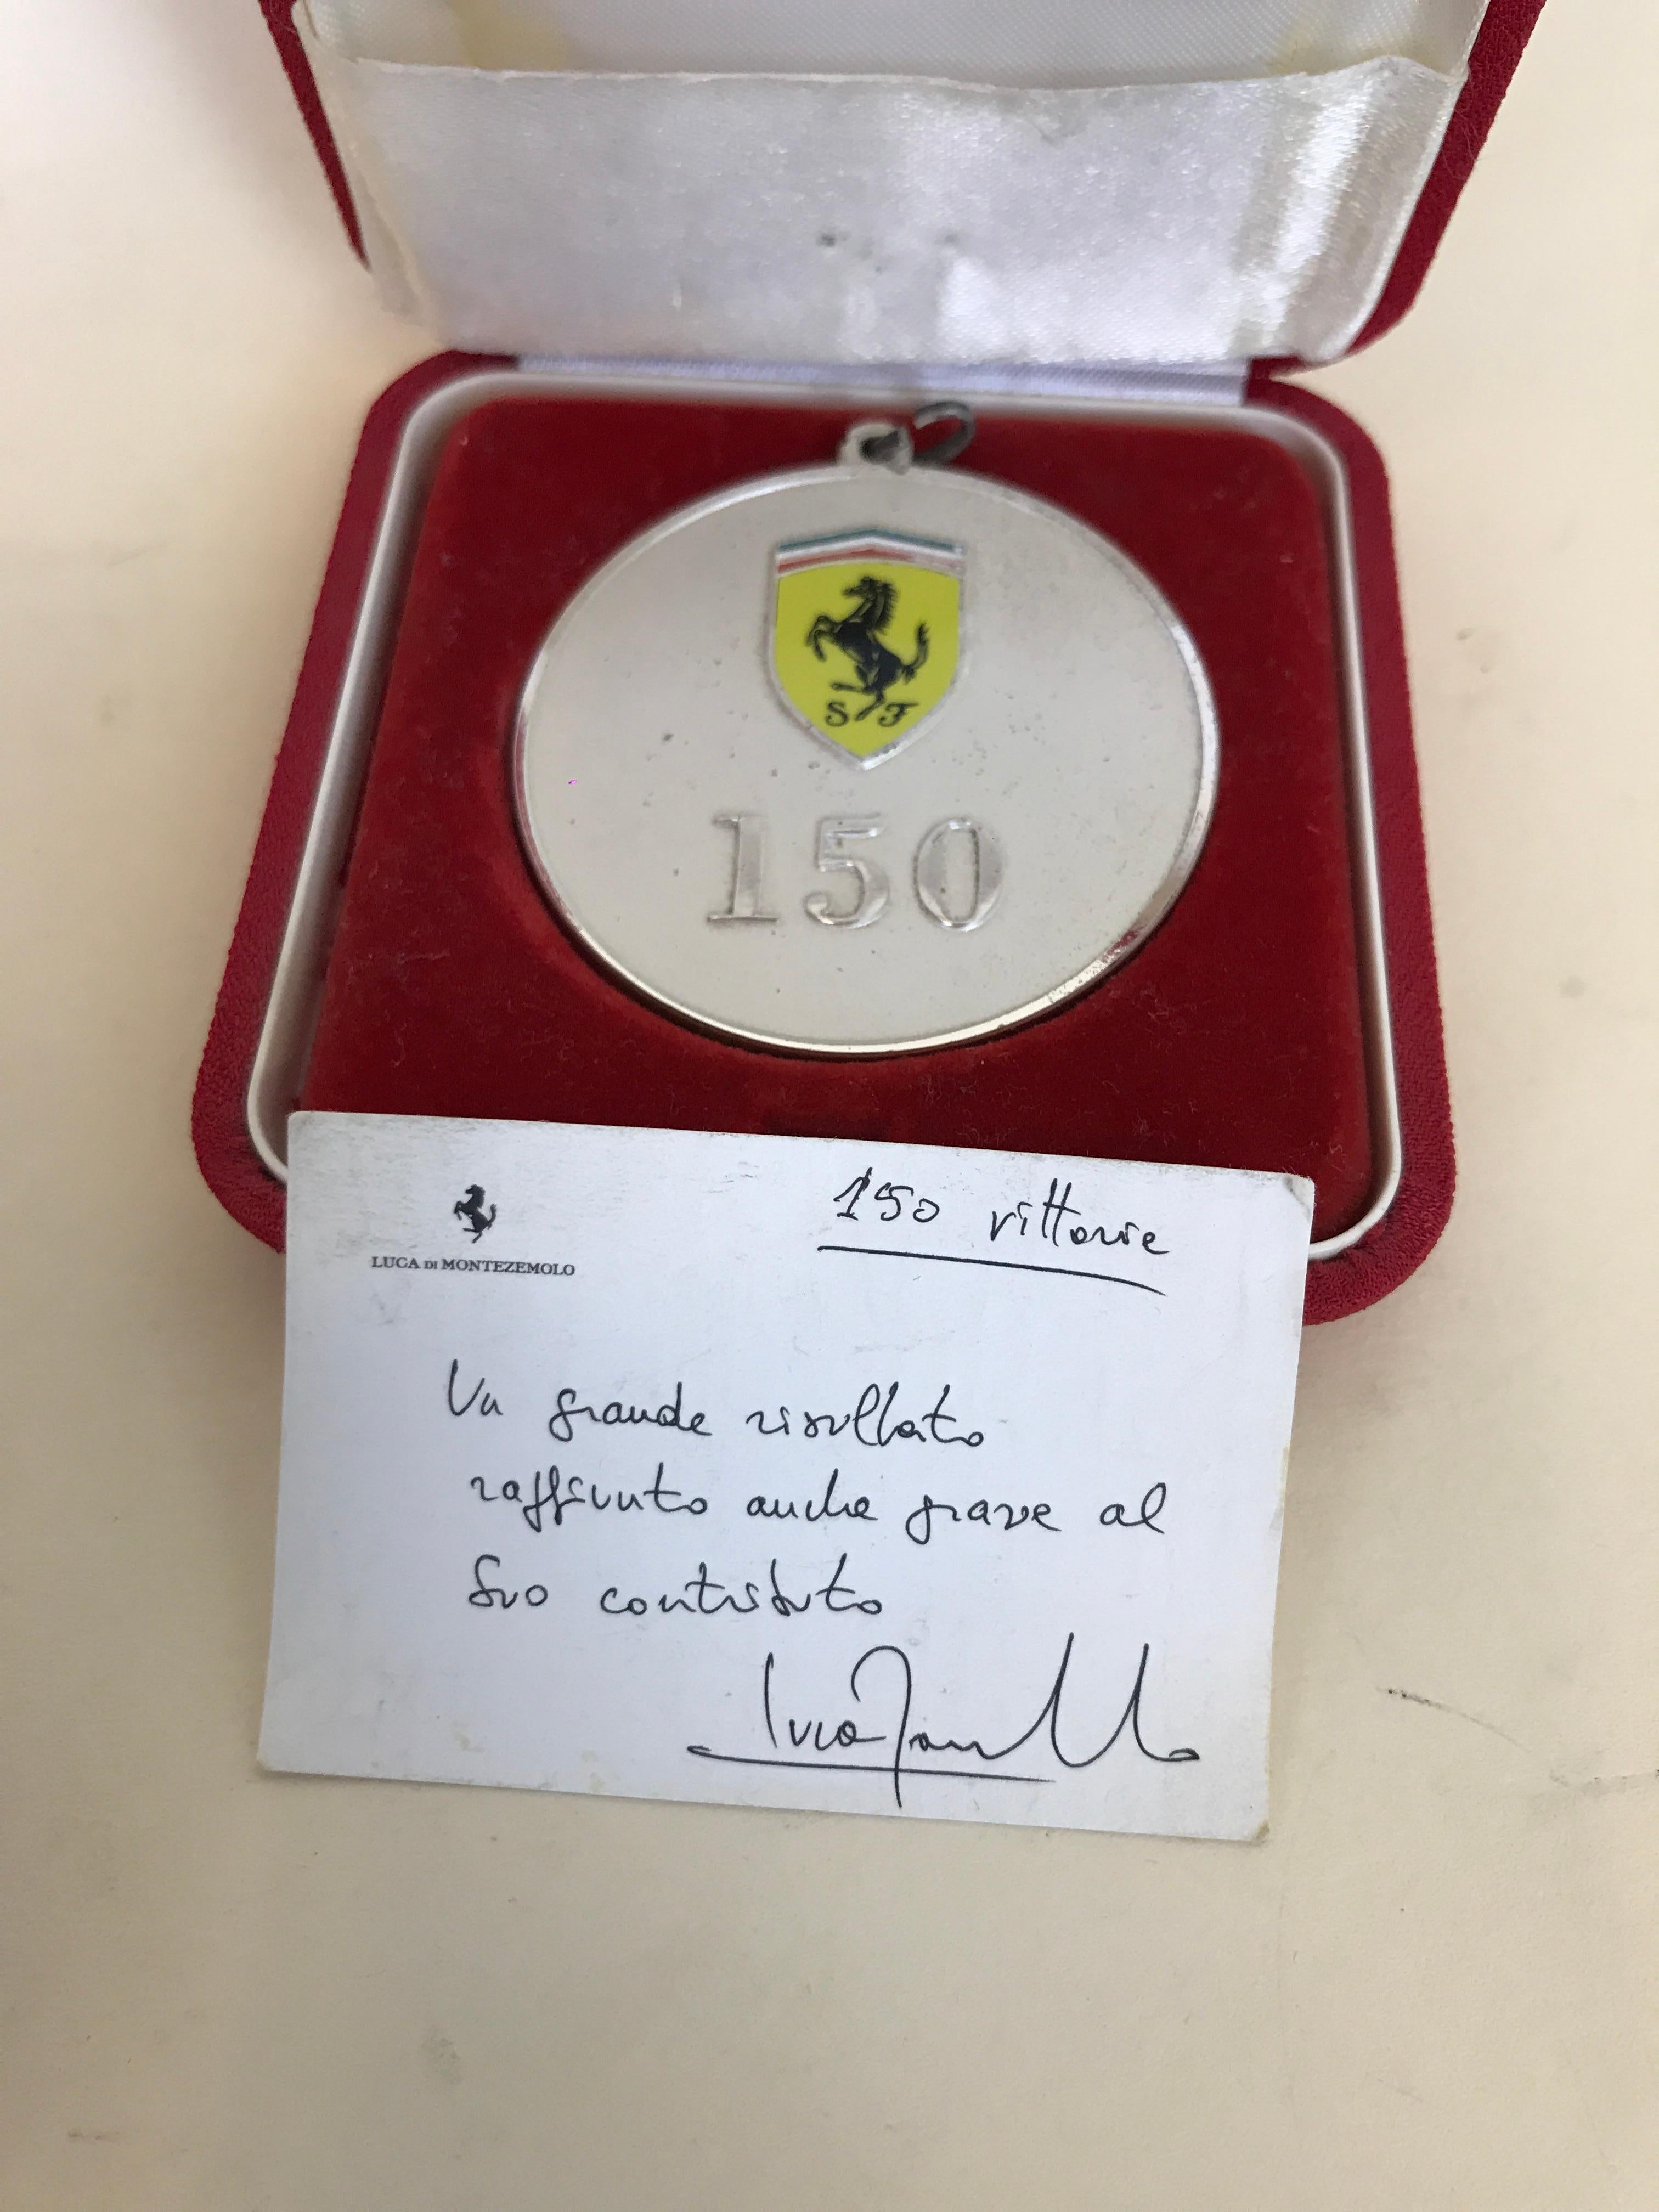 2002 Vintage Ferrari Commemorative Medal Celebrating the 150th Victory of GP For Sale 1